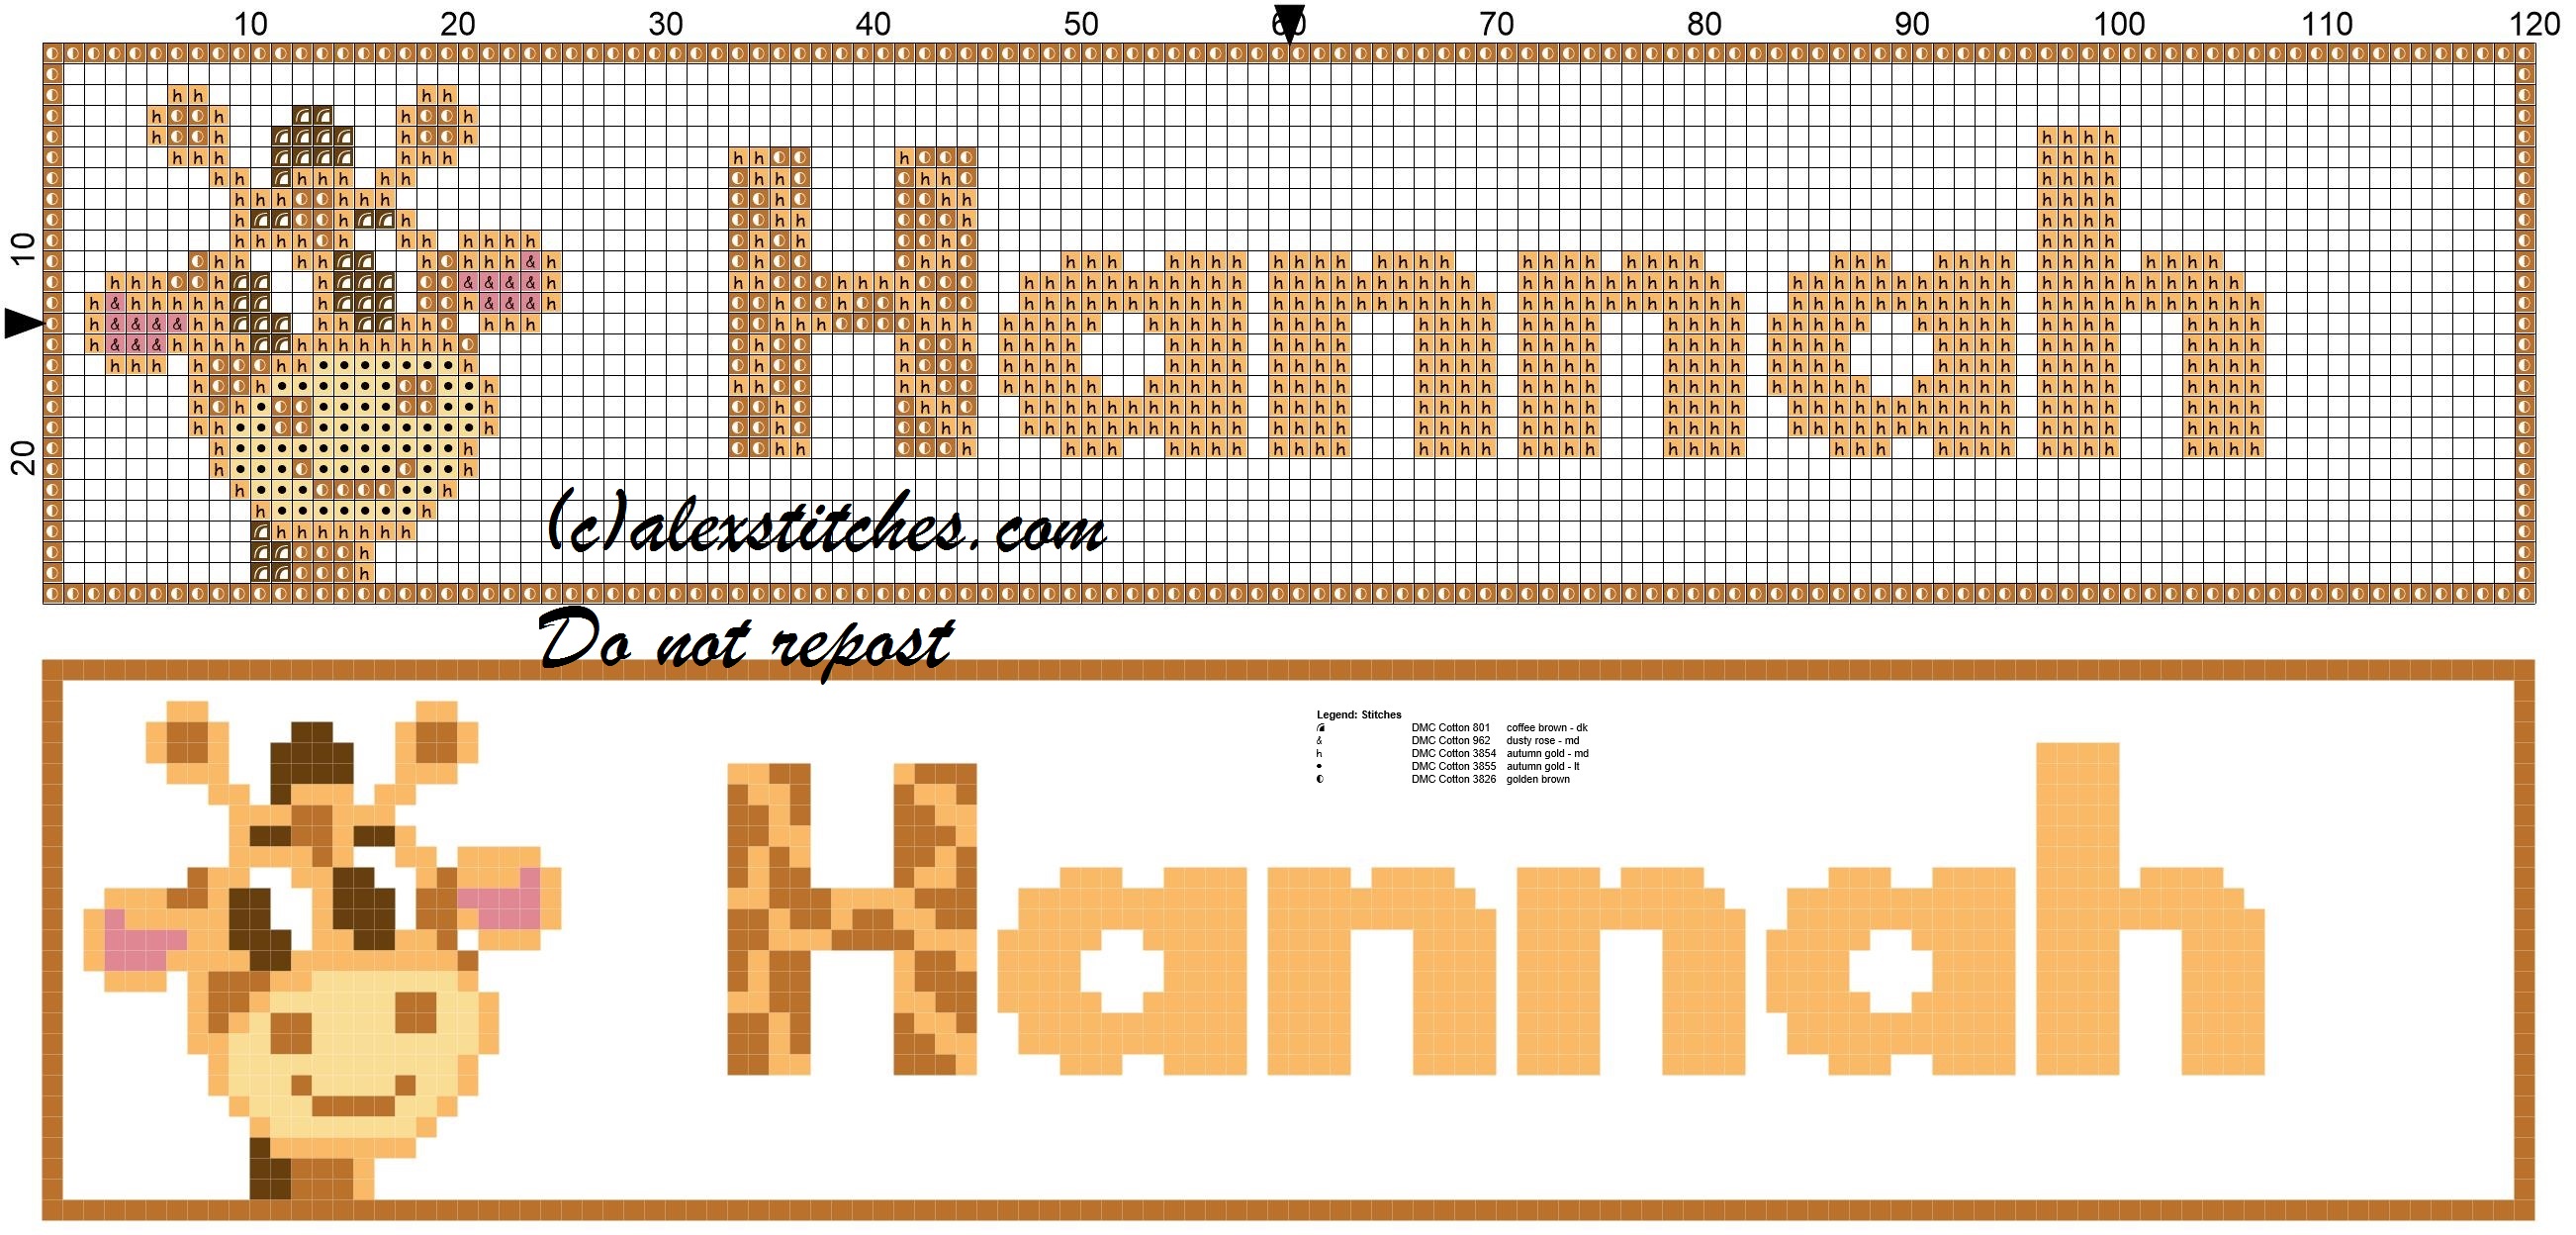 Hannah name with giraffe cross stitch pattern